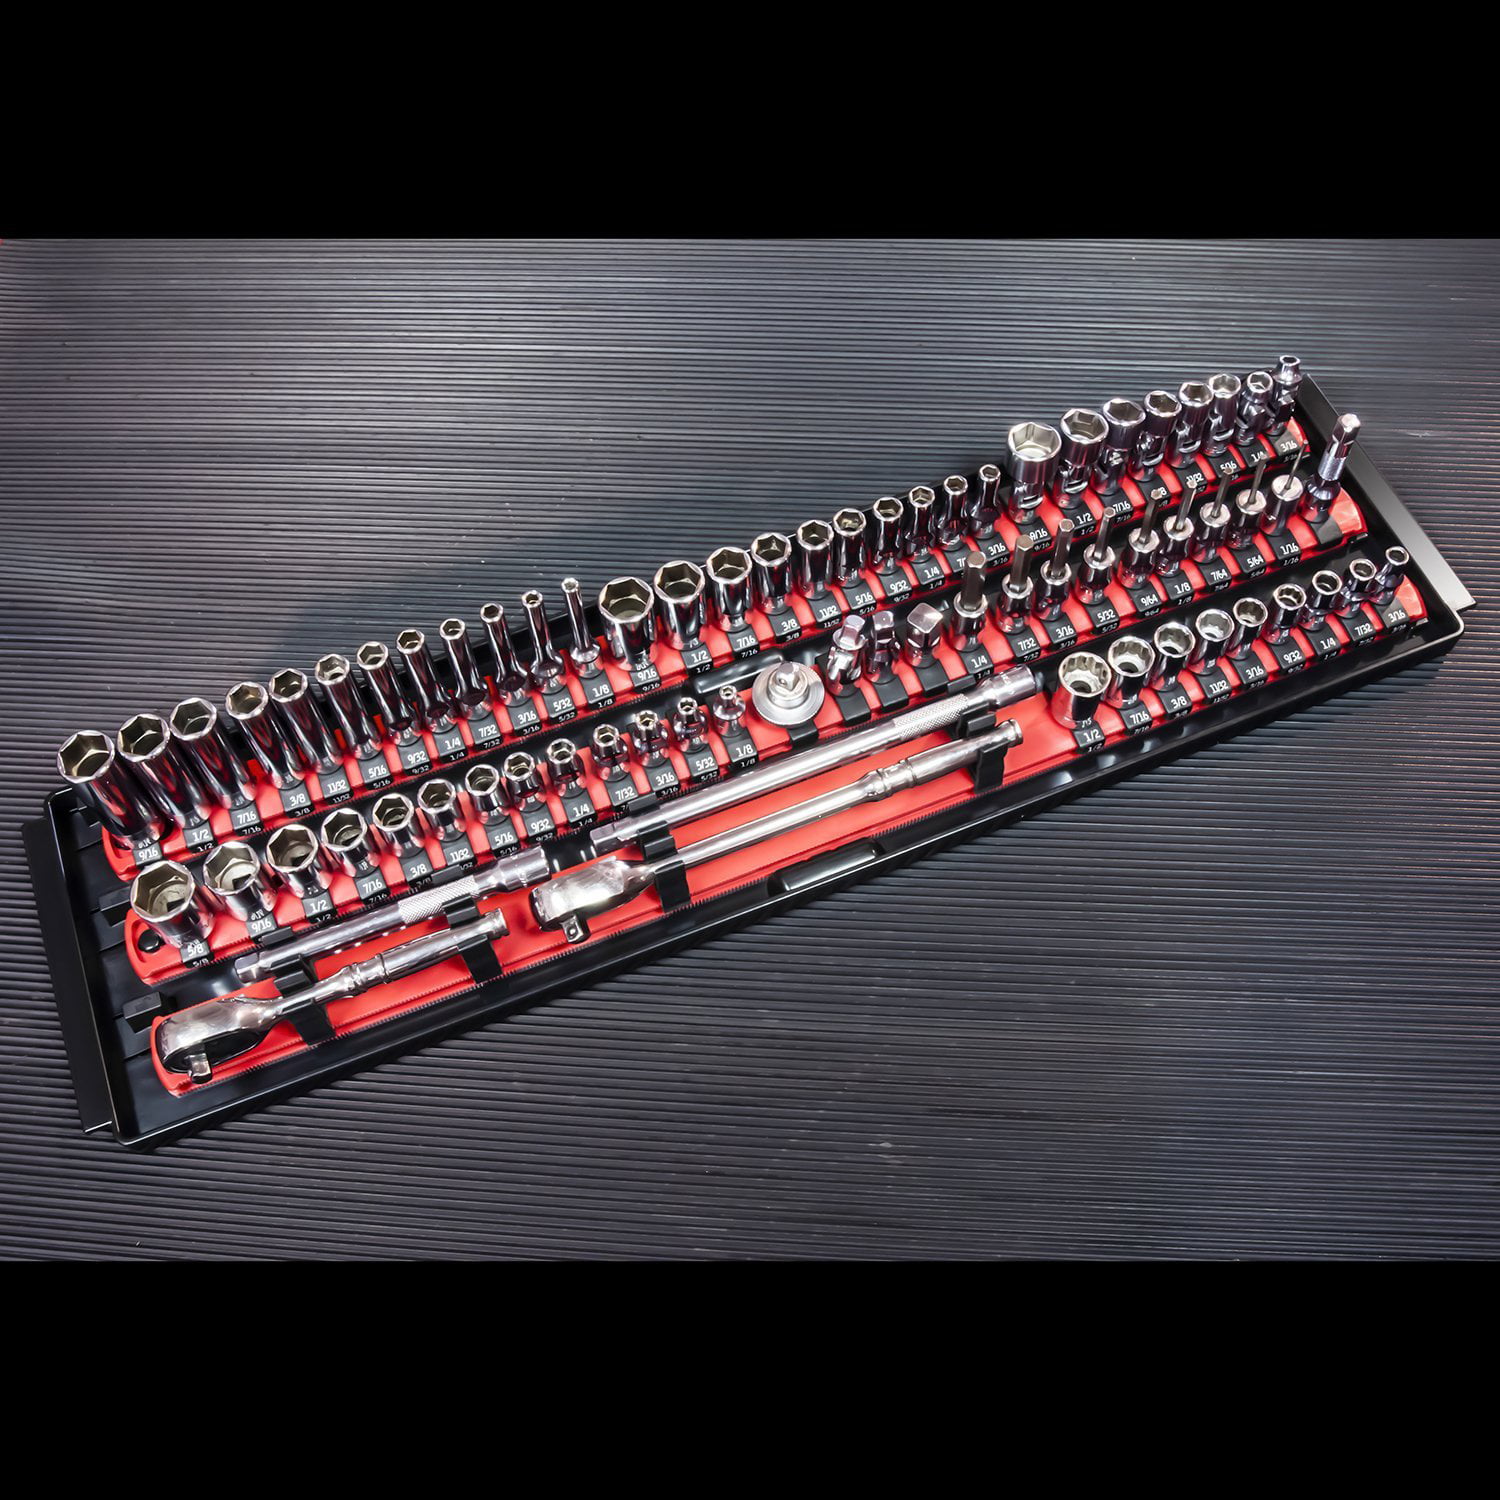 Ernst Manufacturing 8490 Socket Boss 3-Rail Multi-Drive Organizer 13" Red Storag 